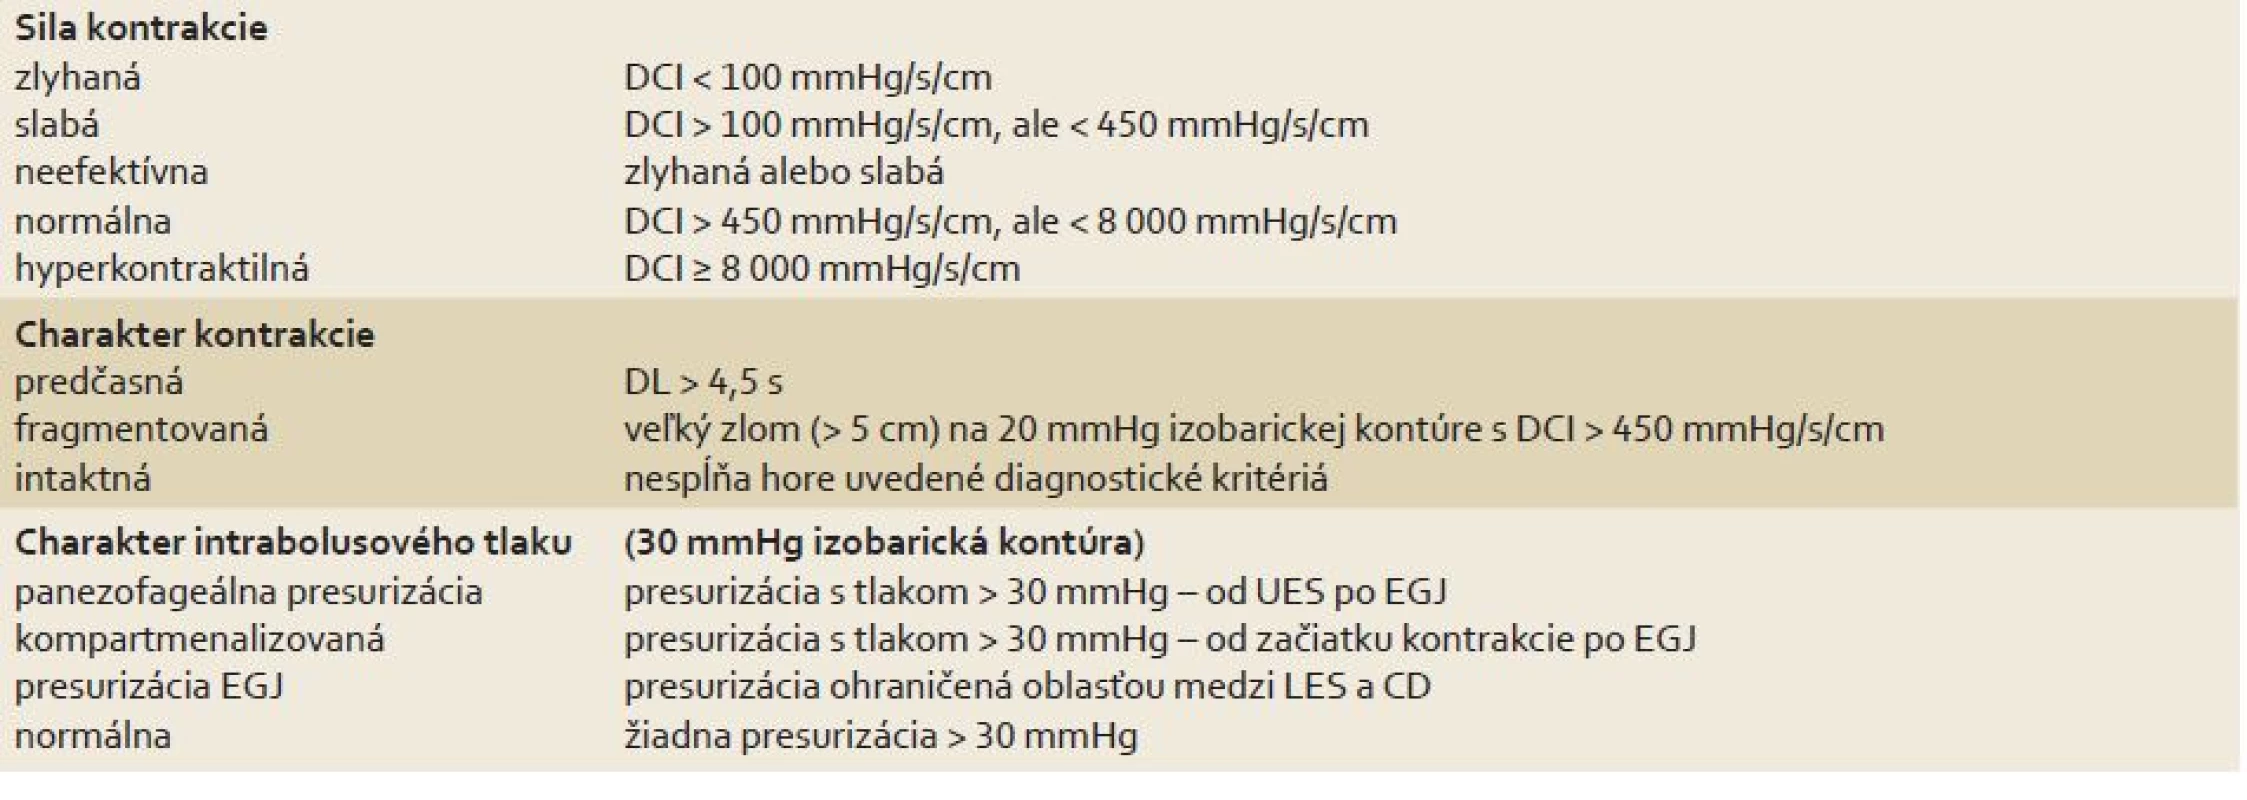 Kontrakcia pažeráka.
Tab. 1. Contraction of the esophagus.